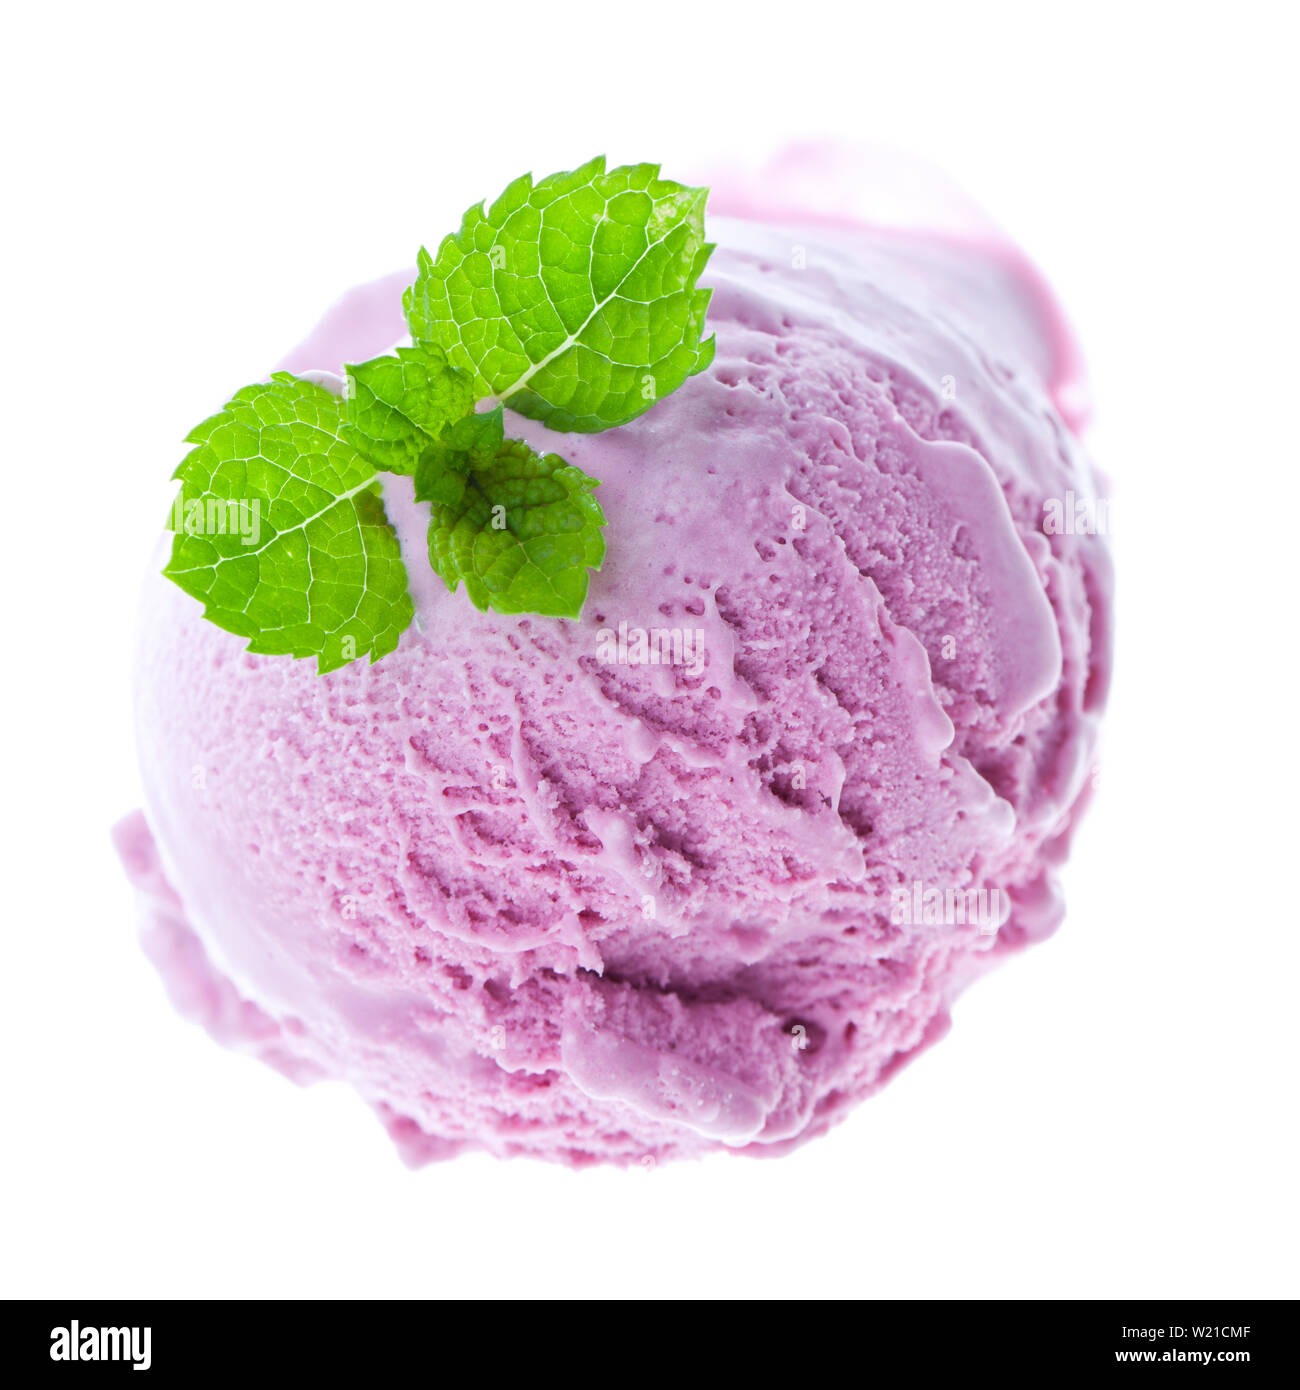 A scoop of wild berry ice cream from bird's eye view Stock Photo